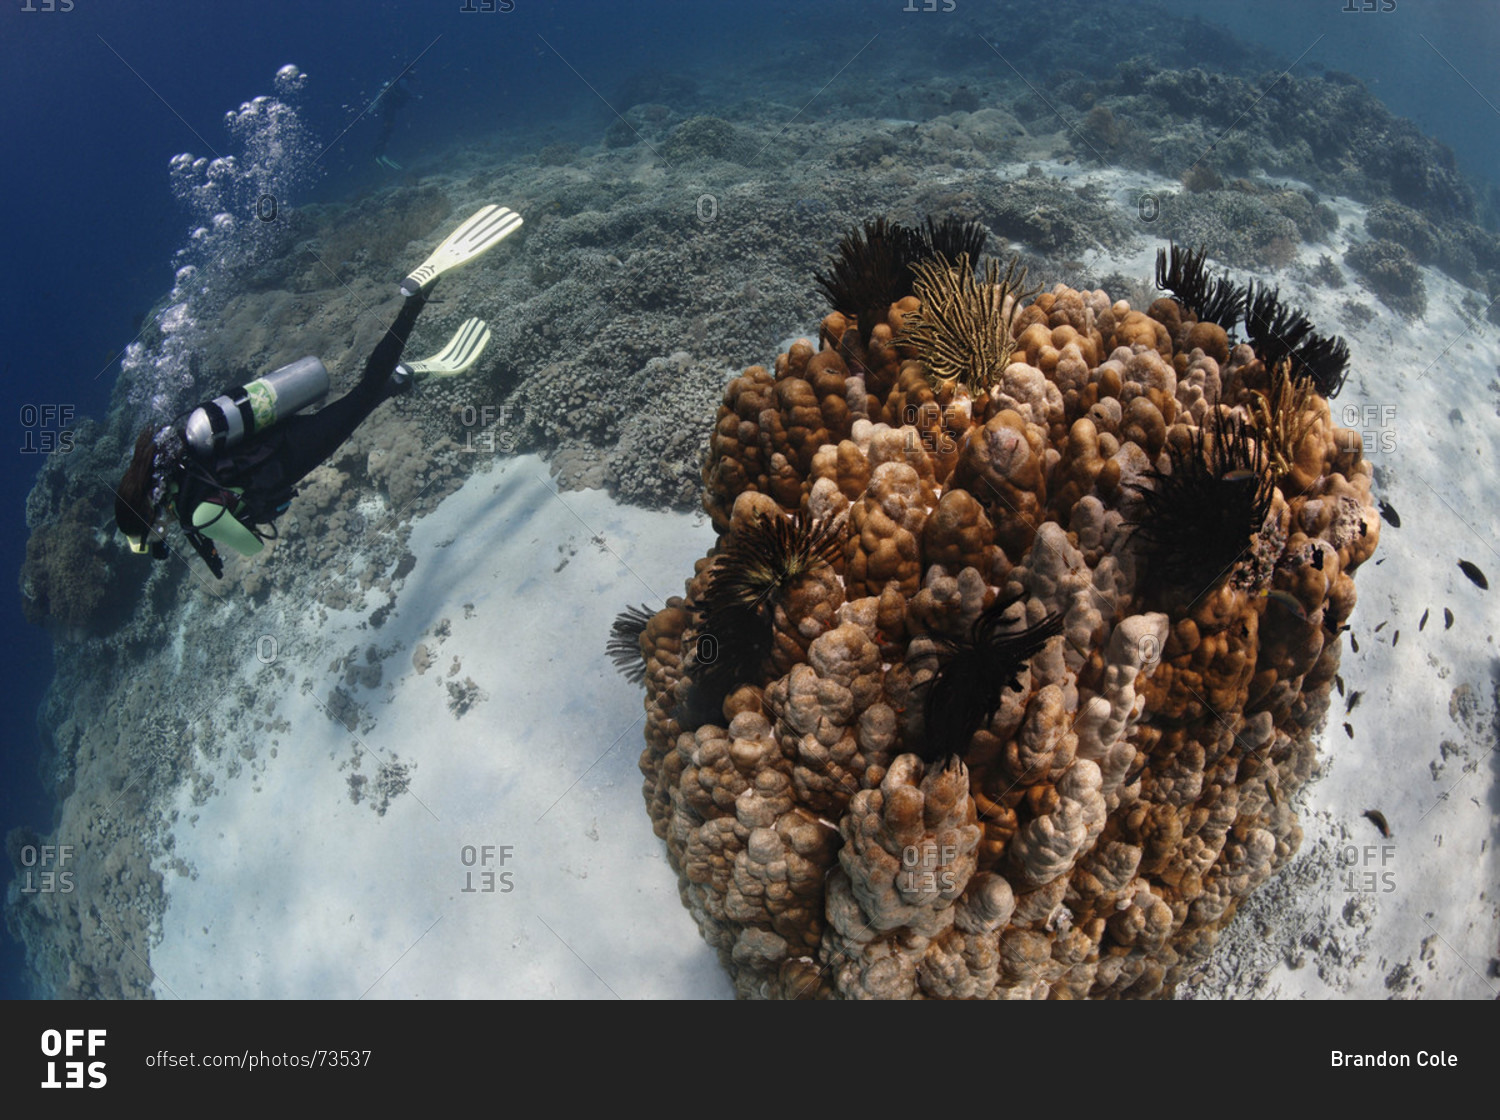 Scuba diver swims along coral reef, tropical Indo-Pacific Ocean region